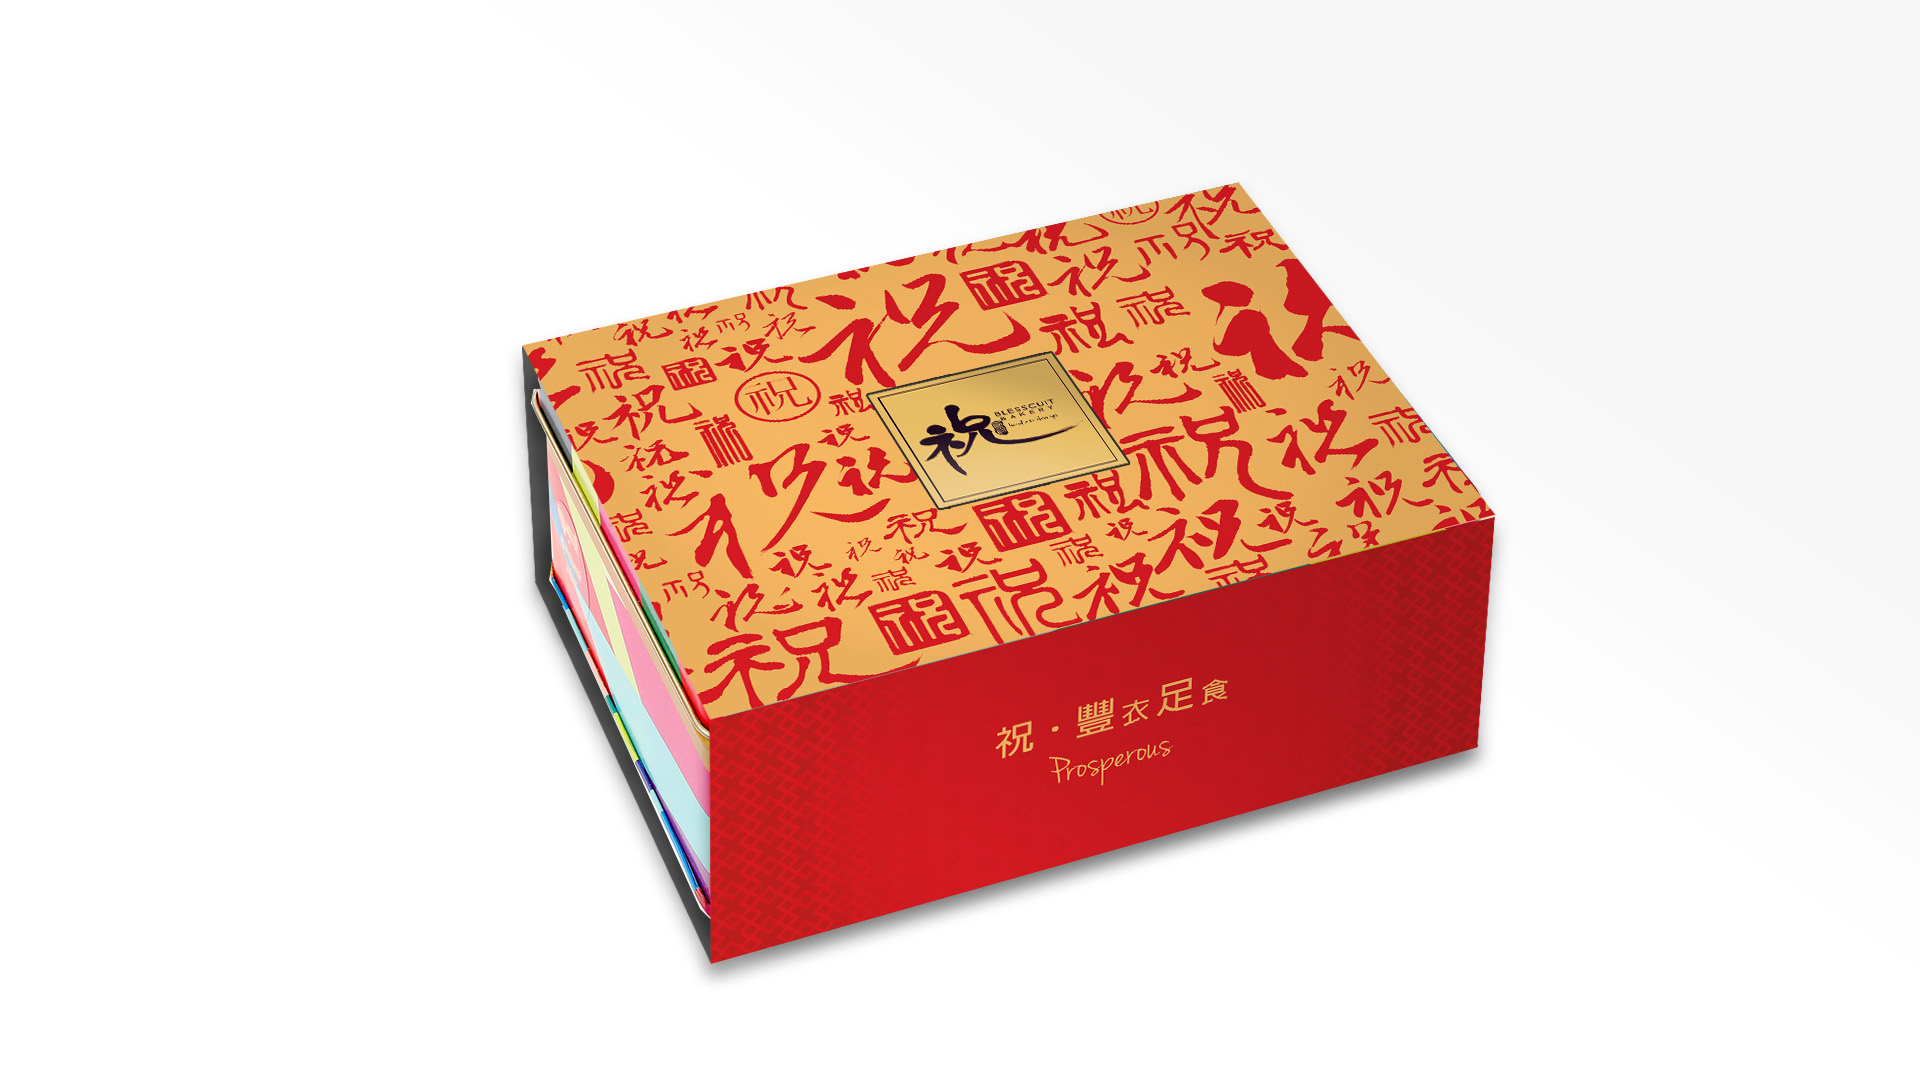 D2 Studio 市场营销策划, 品牌策划与平面设计公司的香港及广州中国团队为cookies brand安排平面设计与企业杂志设计packaging design and gift design 2